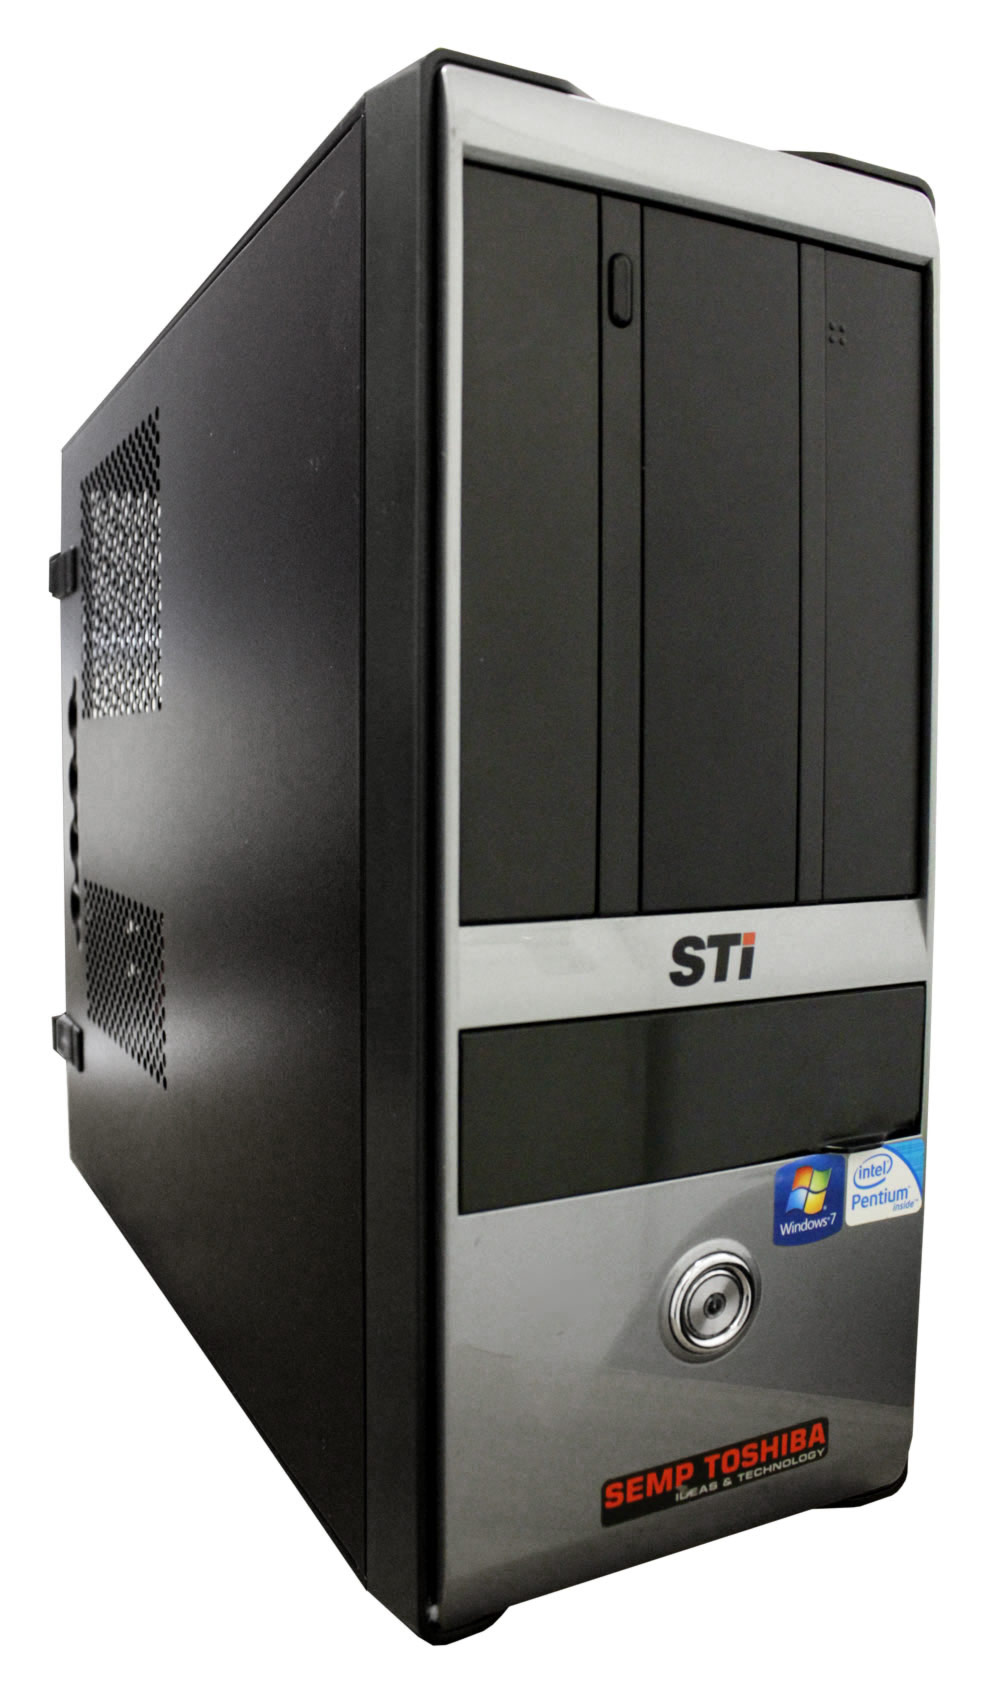 Computador STI - Intel® Pentium® G620, 4GB, HD 500GB, DVD, Windows 7 Pro - Garantia 1 ano - Seminovo